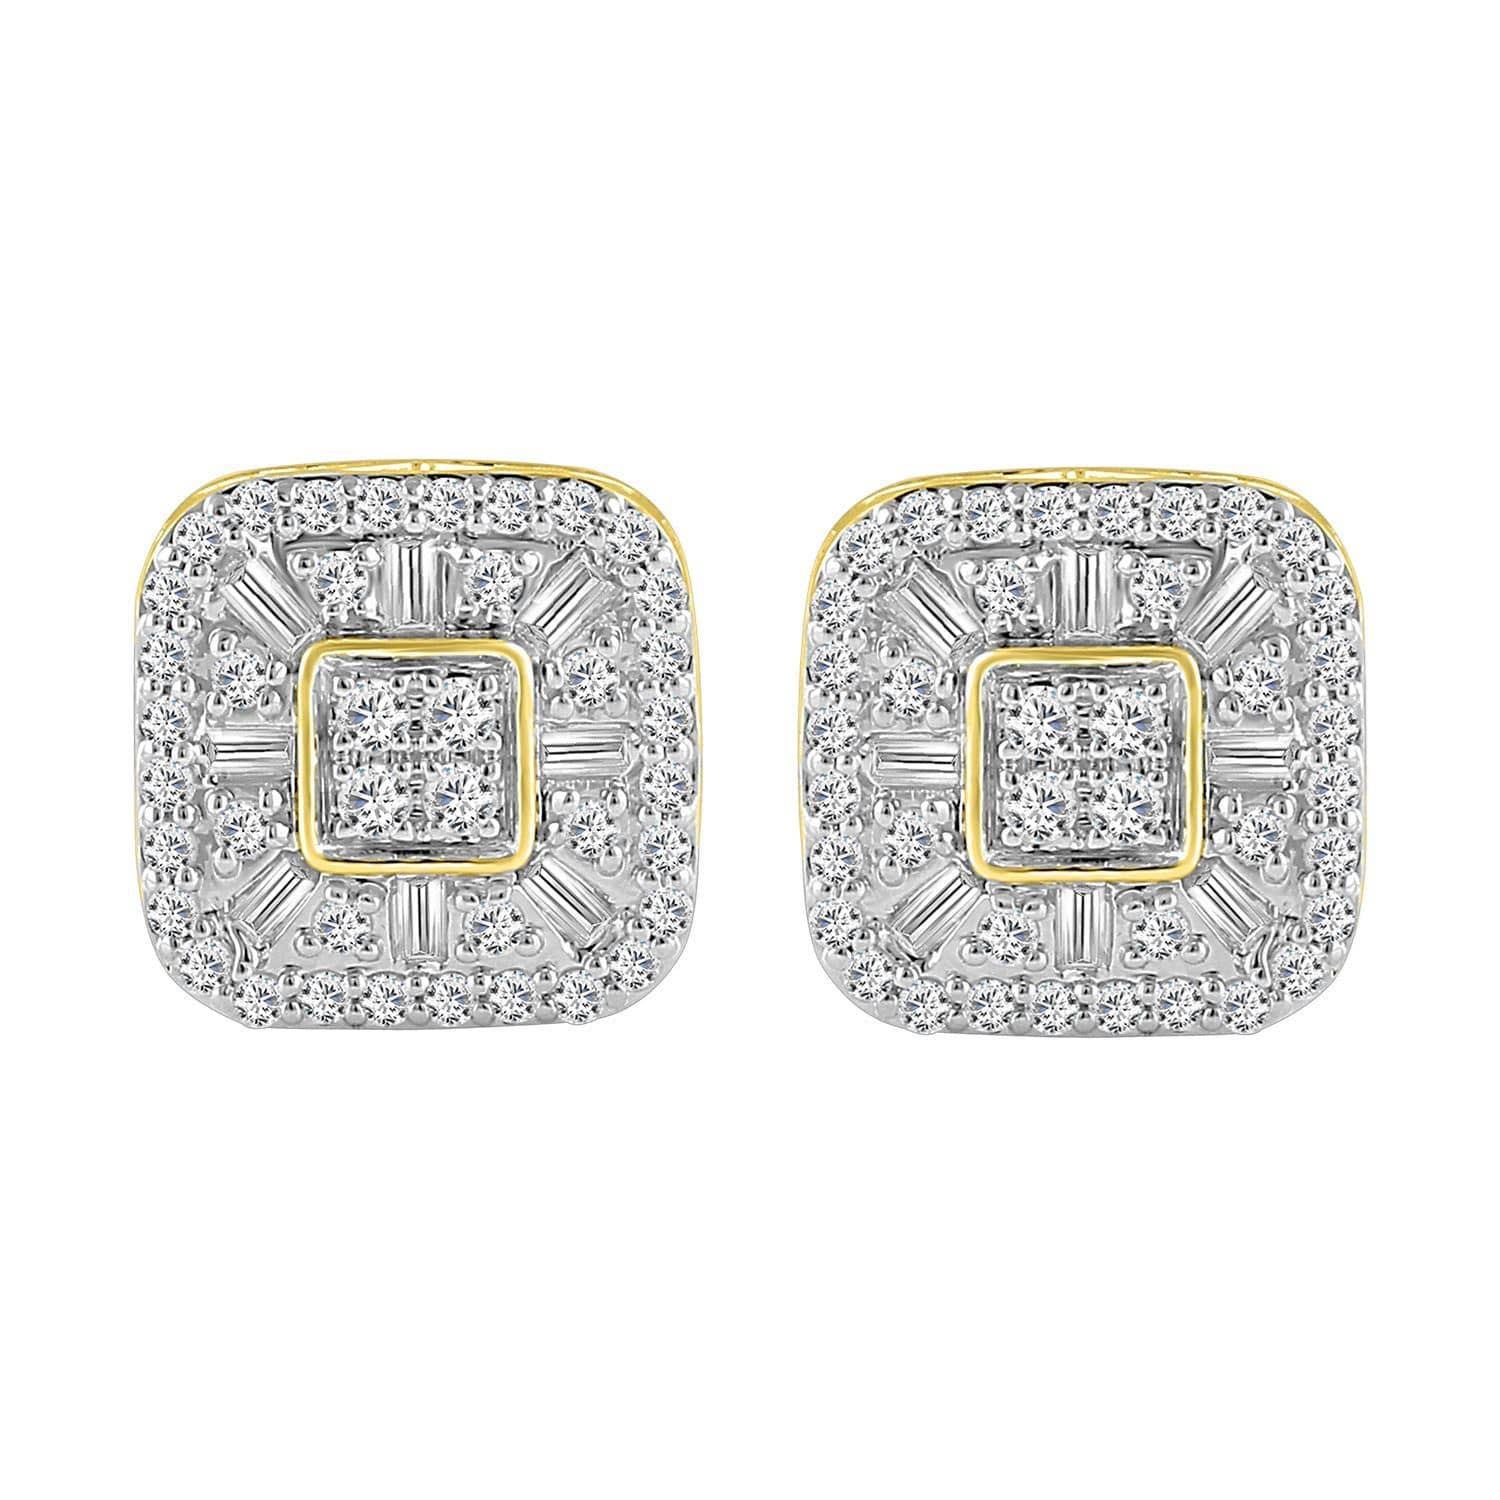 0020665_ladies-earring-1-ct-roundbaguette-diamond-10k-yellow-gold.jpeg